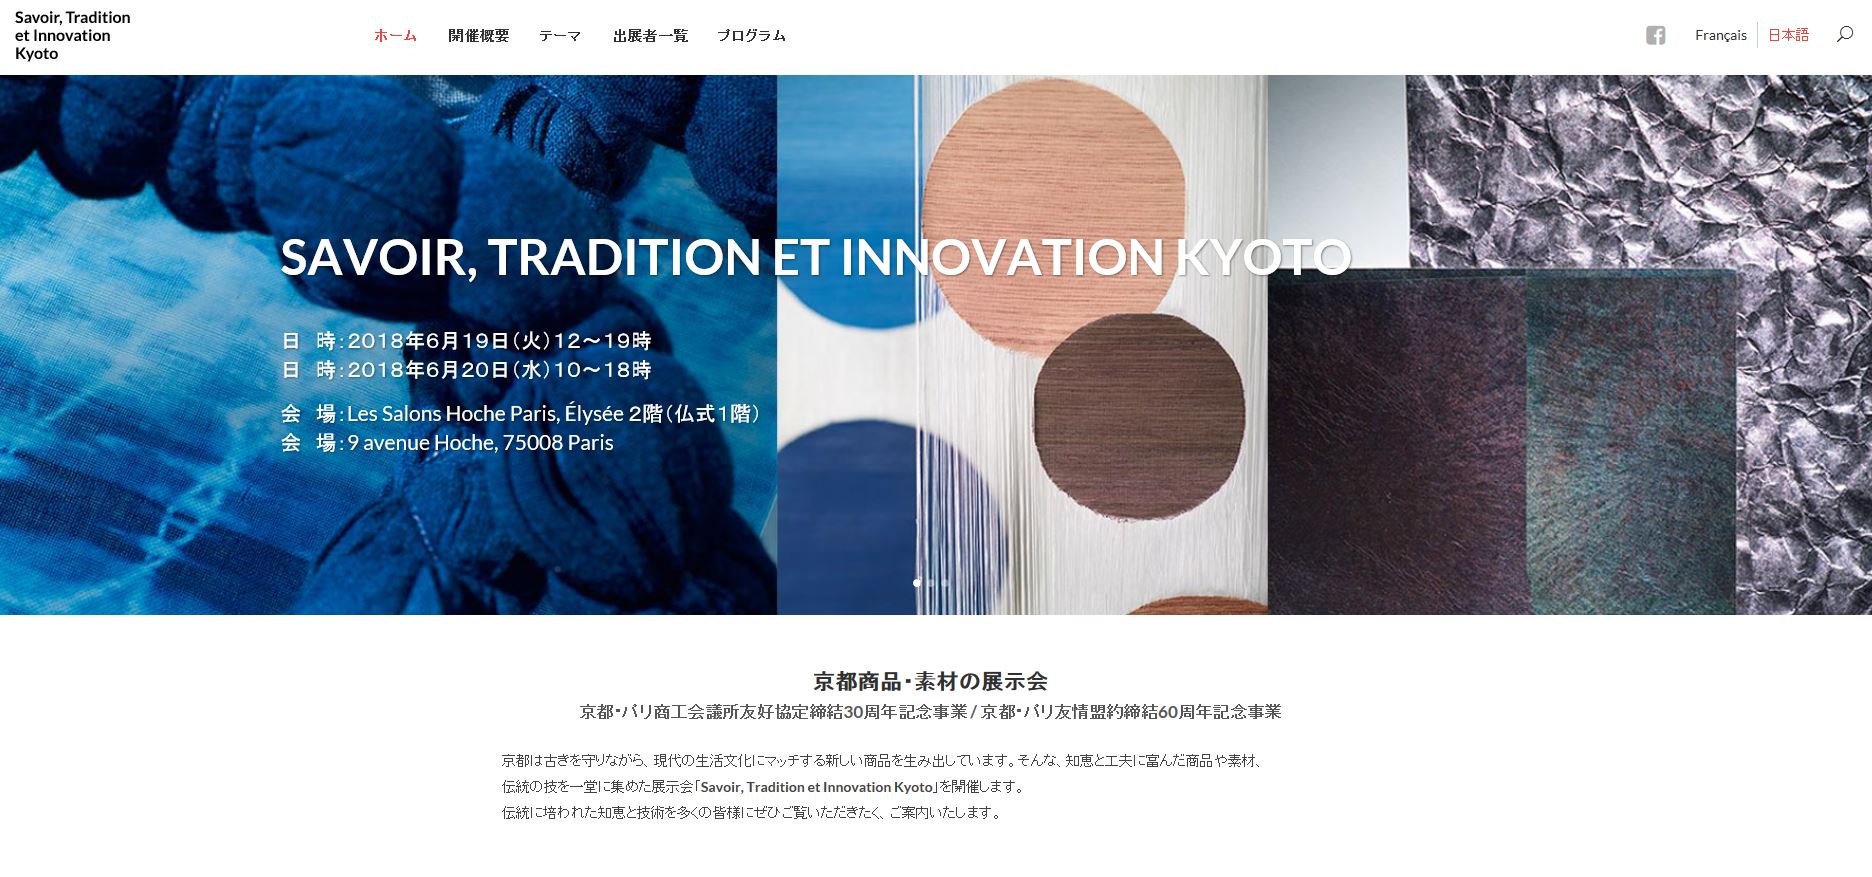 Savoir, Tradition et Innovation Kyoto